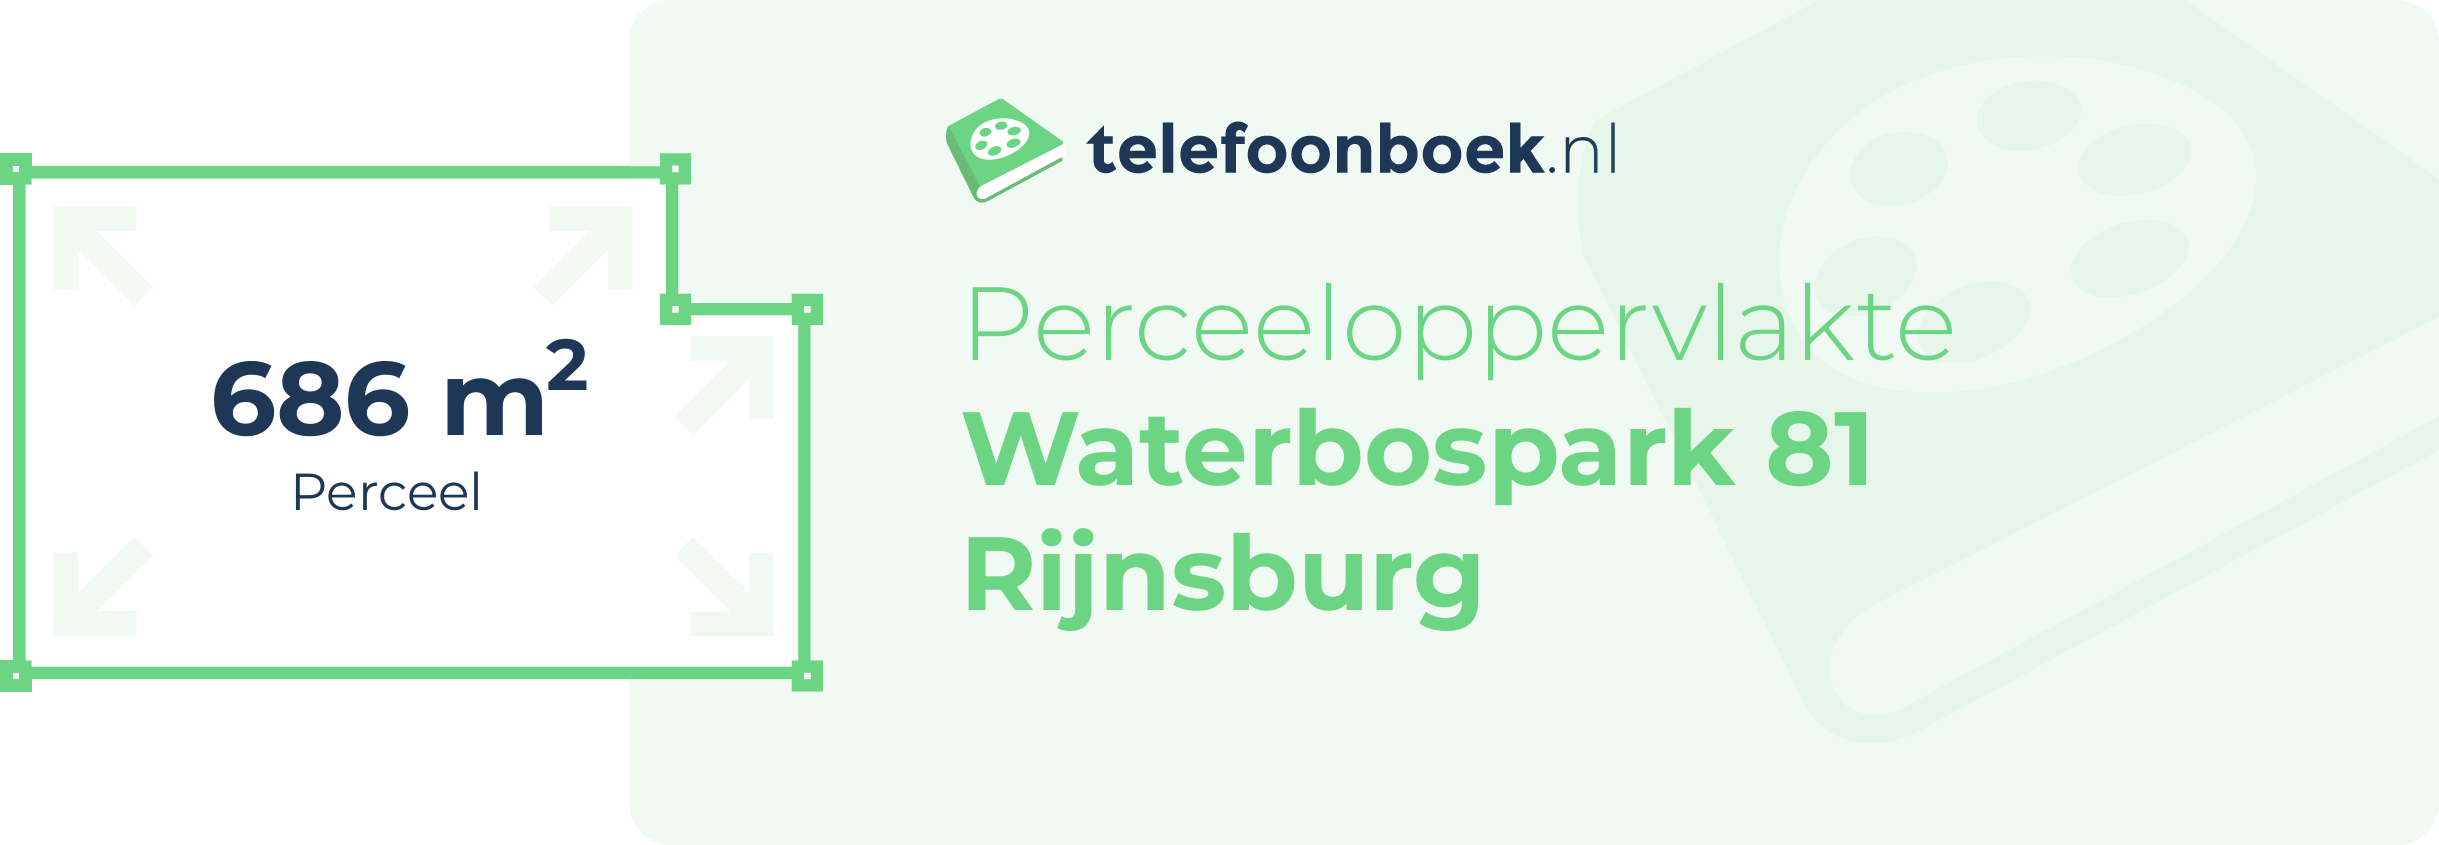 Perceeloppervlakte Waterbospark 81 Rijnsburg